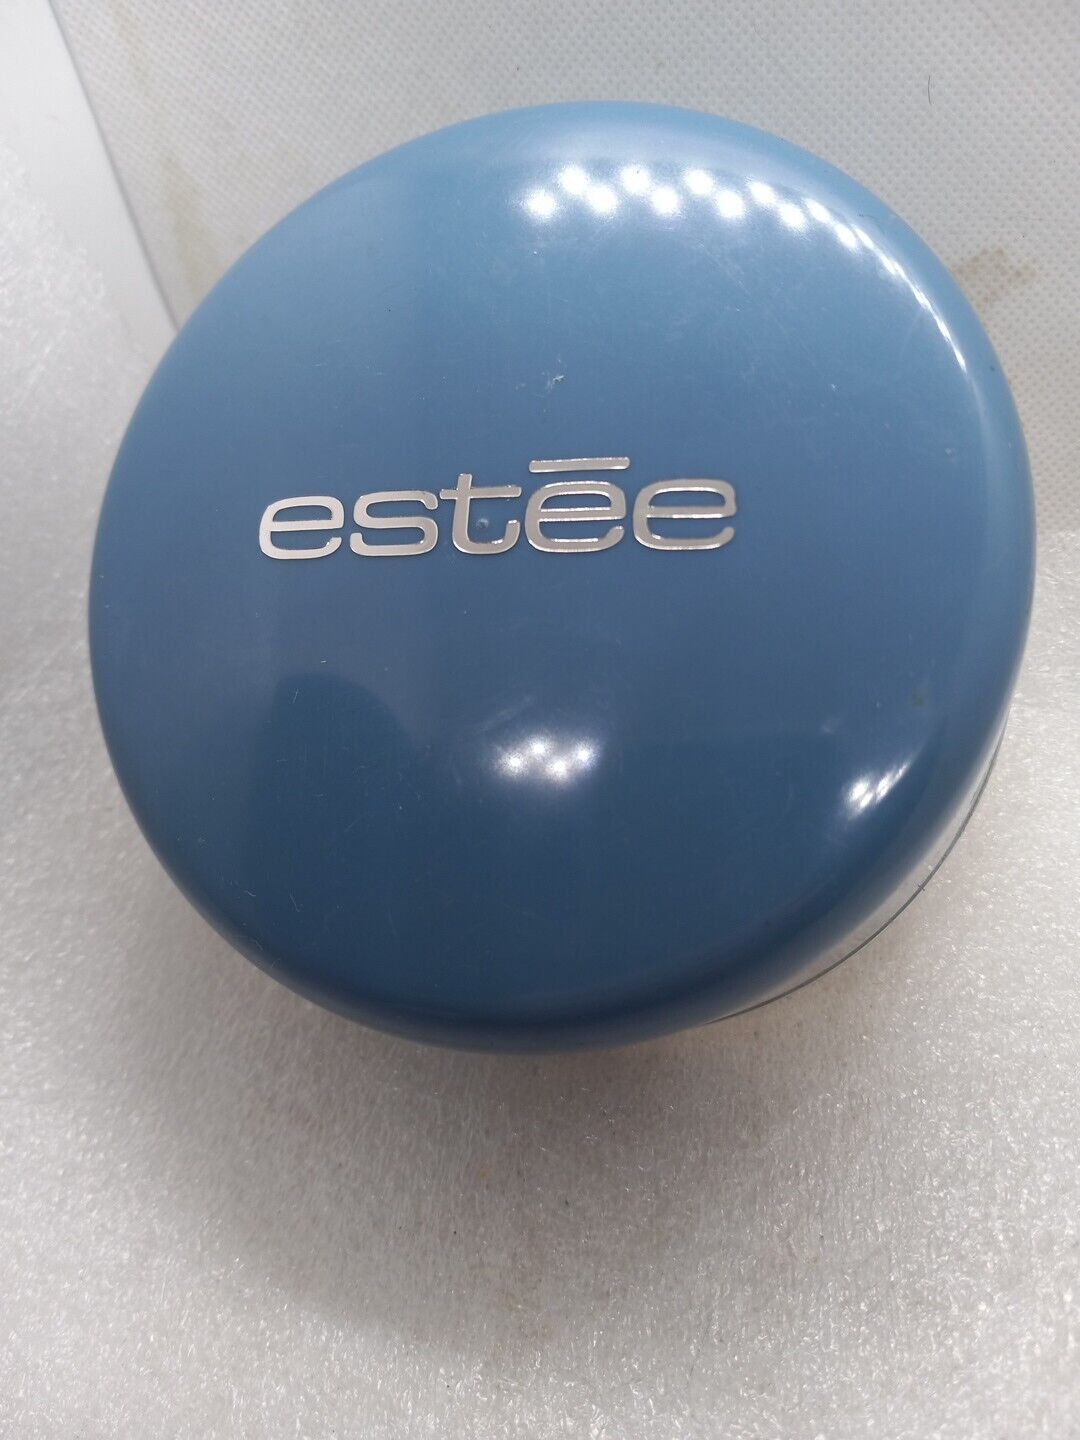 Estee Lauder  Perfumed Body Dusting Powder 3 Oz Vintage Blue Container Unused 